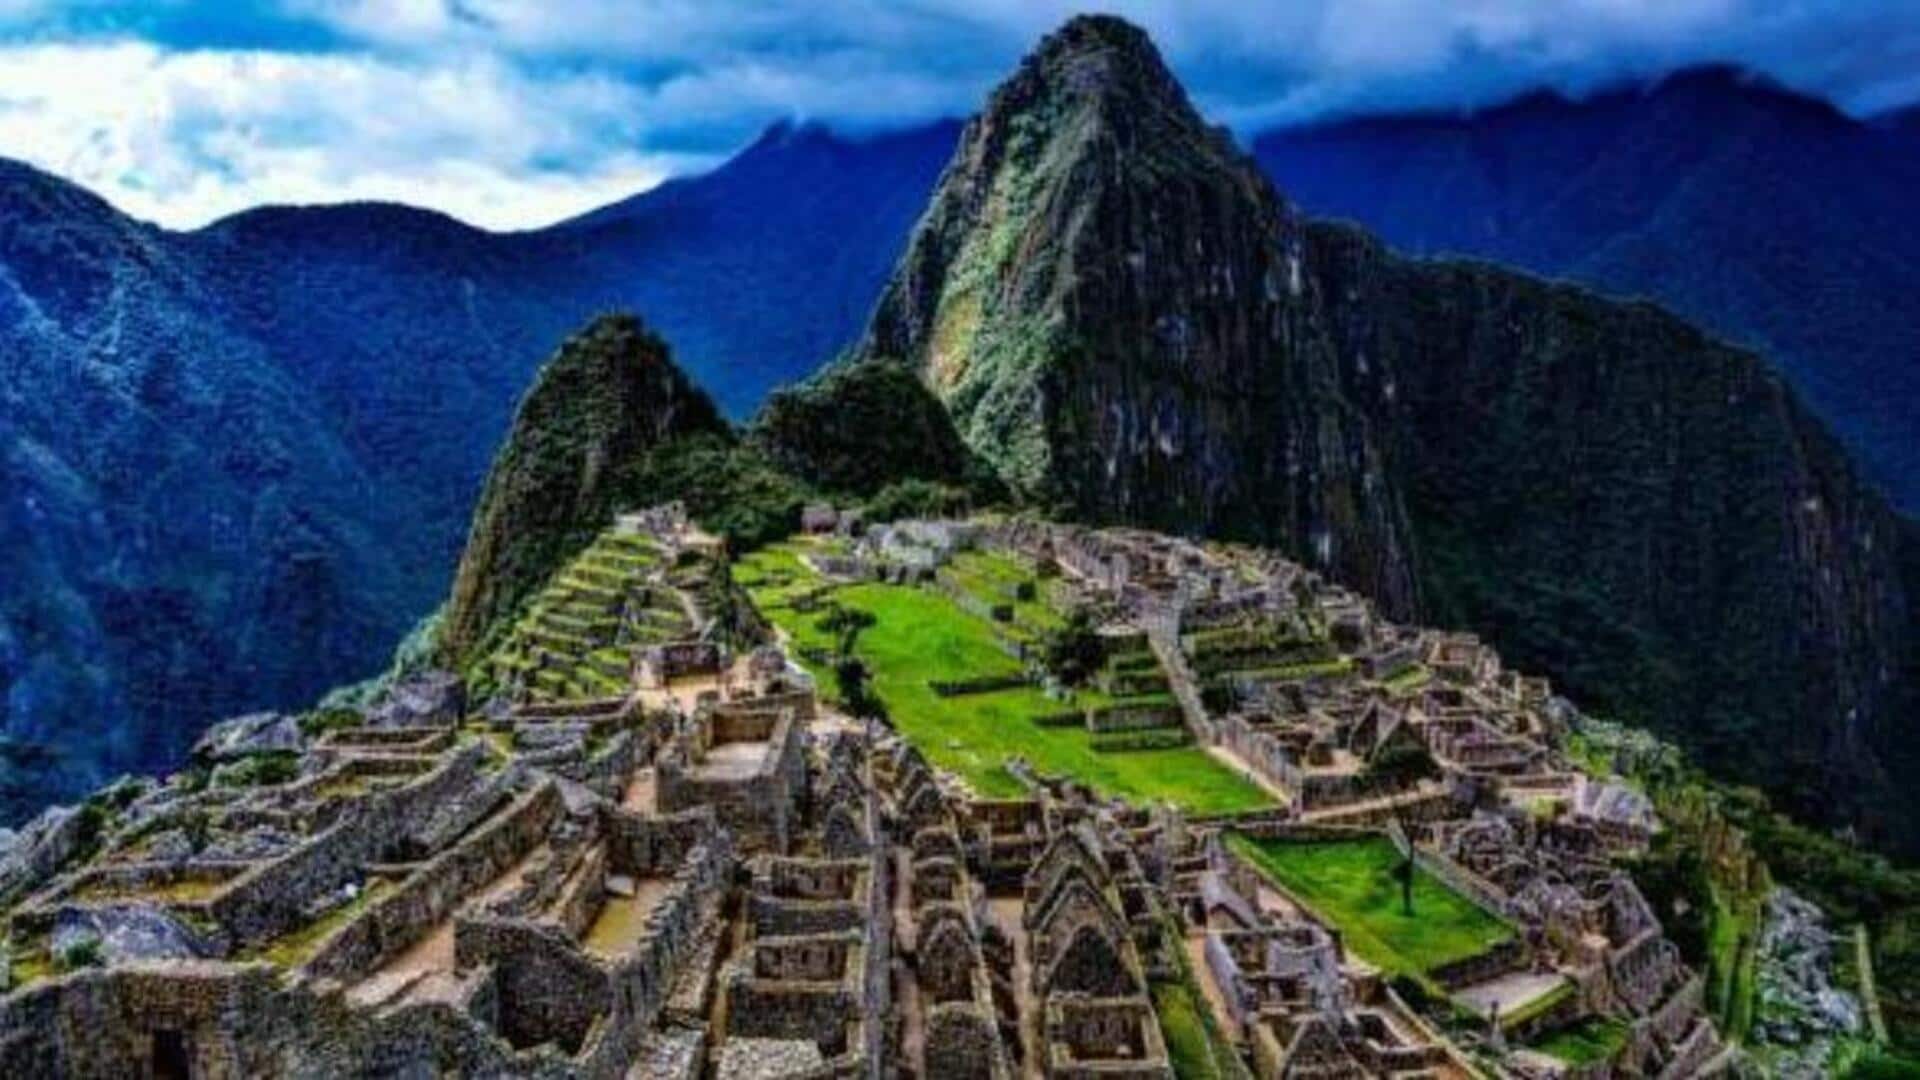 Jelajahi jalur Inca yang tersembunyi di Cusco dengan panduan perjalanan ini